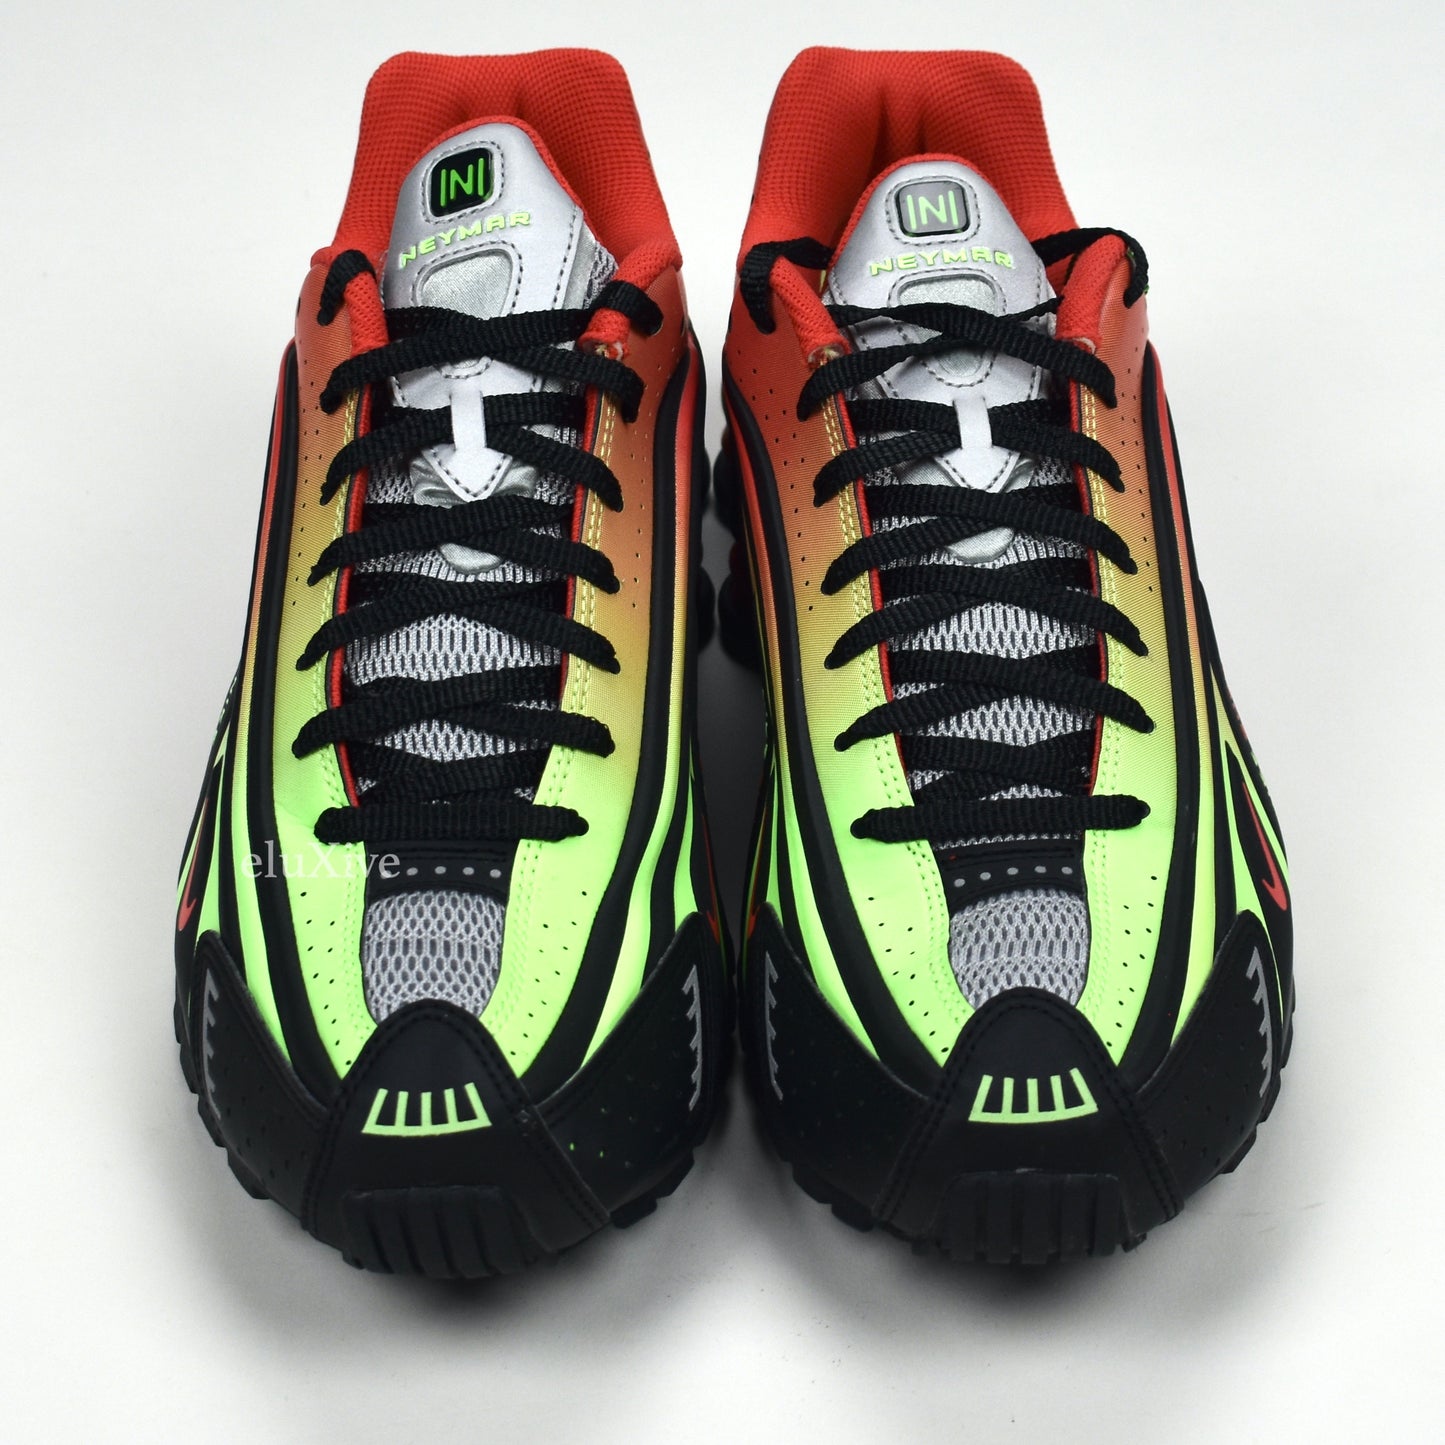 Nike - Shox R4 Neymar Jr. (Black/Gradient)